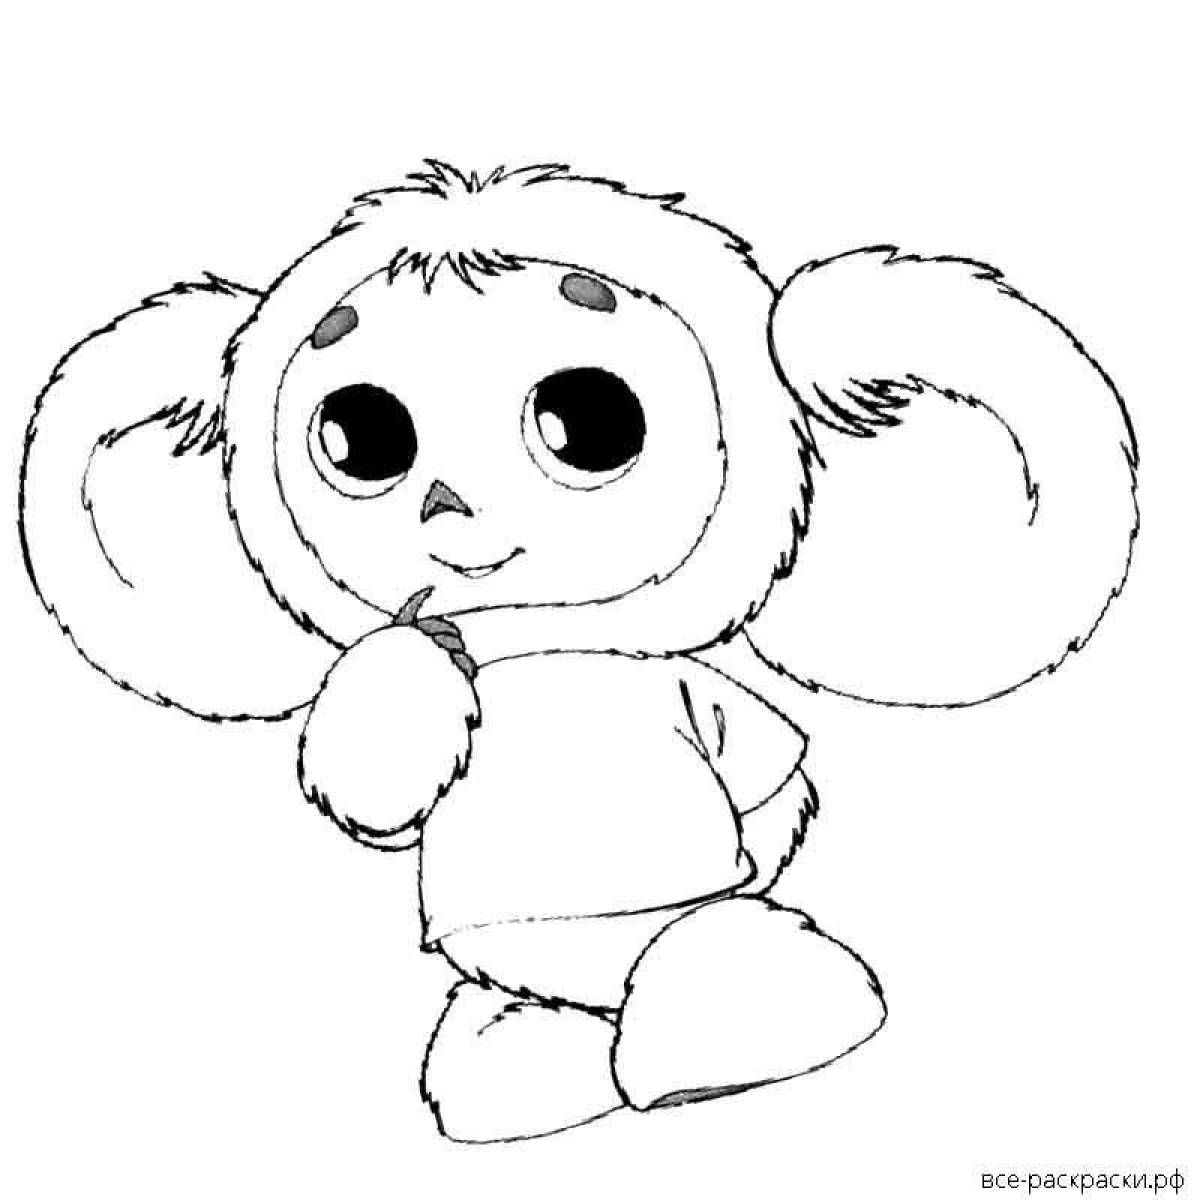 Animated cartoon cheburashka